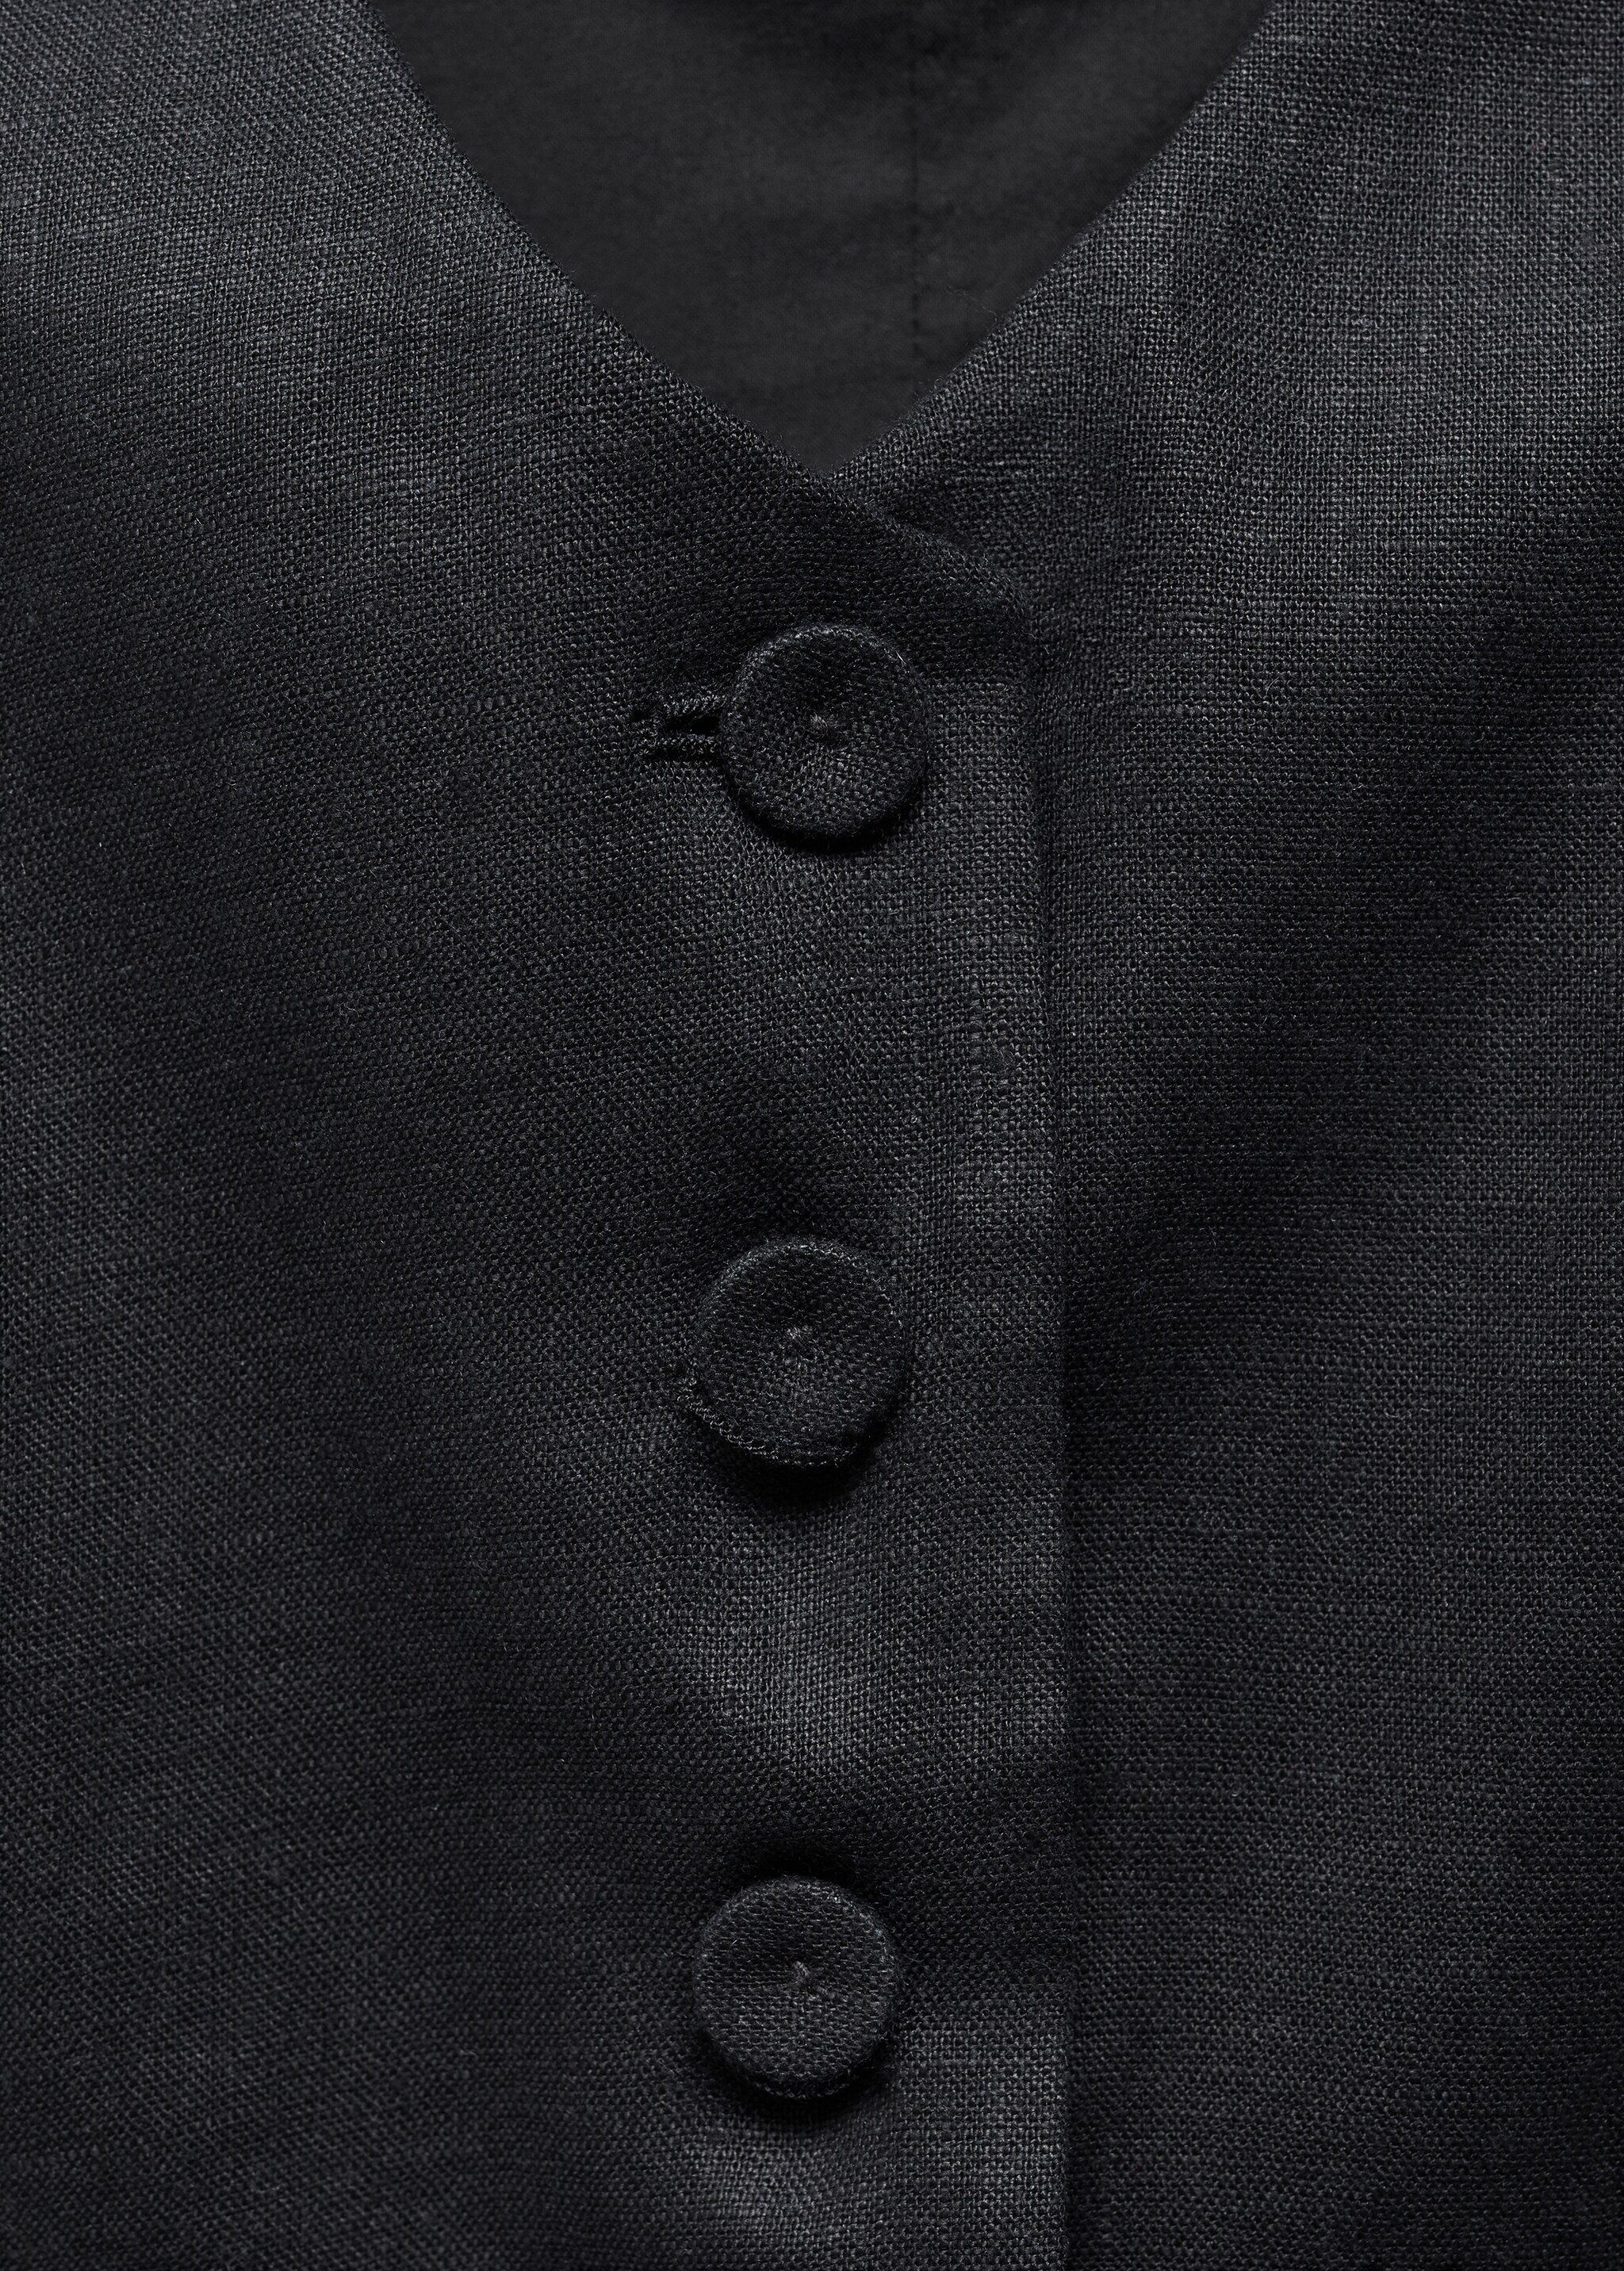 Linen suit waistcoat - Details of the article 8